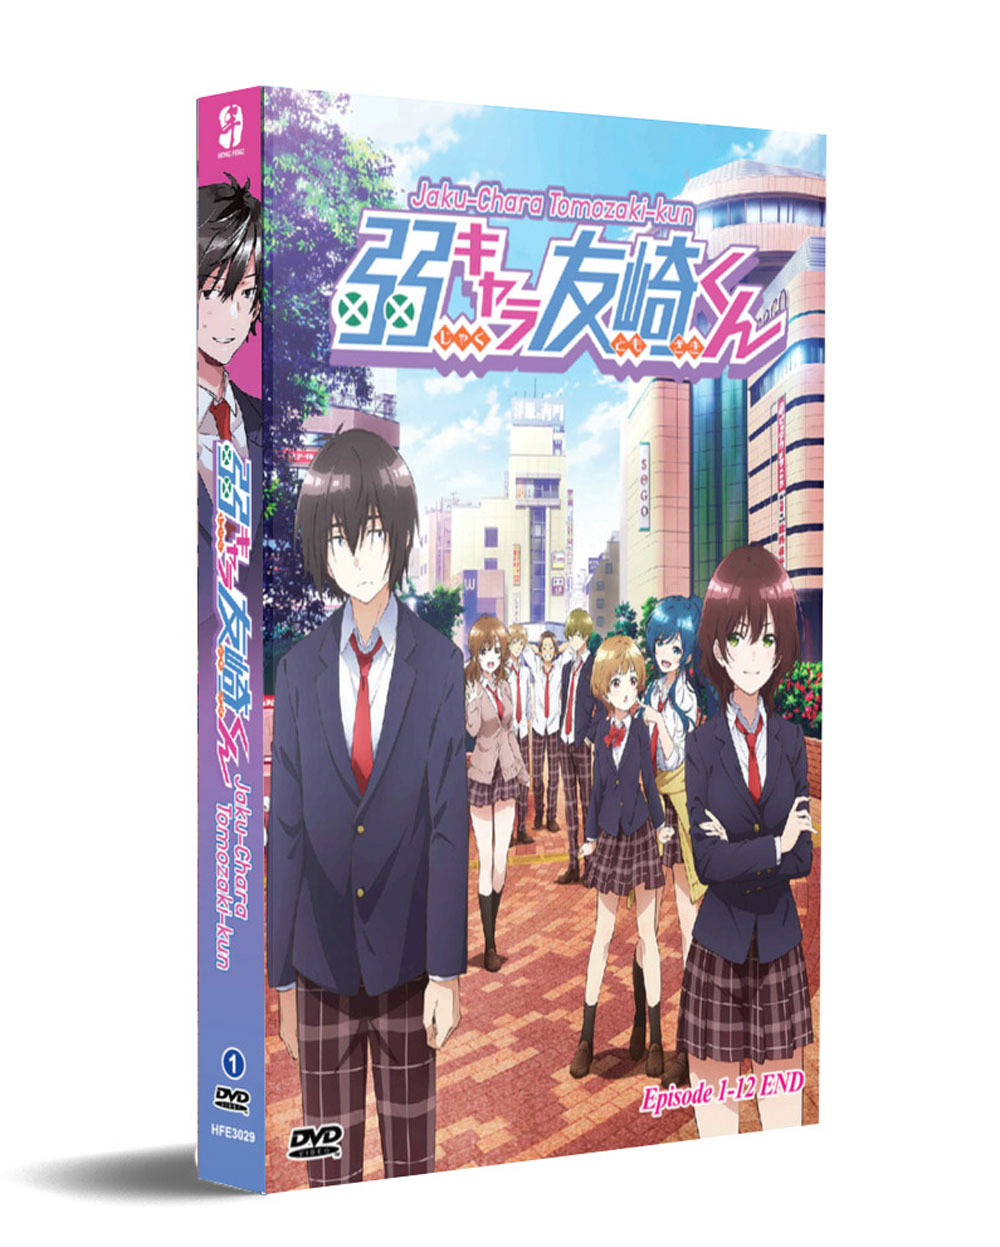 Jaku-Chara Tomozaki-kun (DVD) (2021) Anime